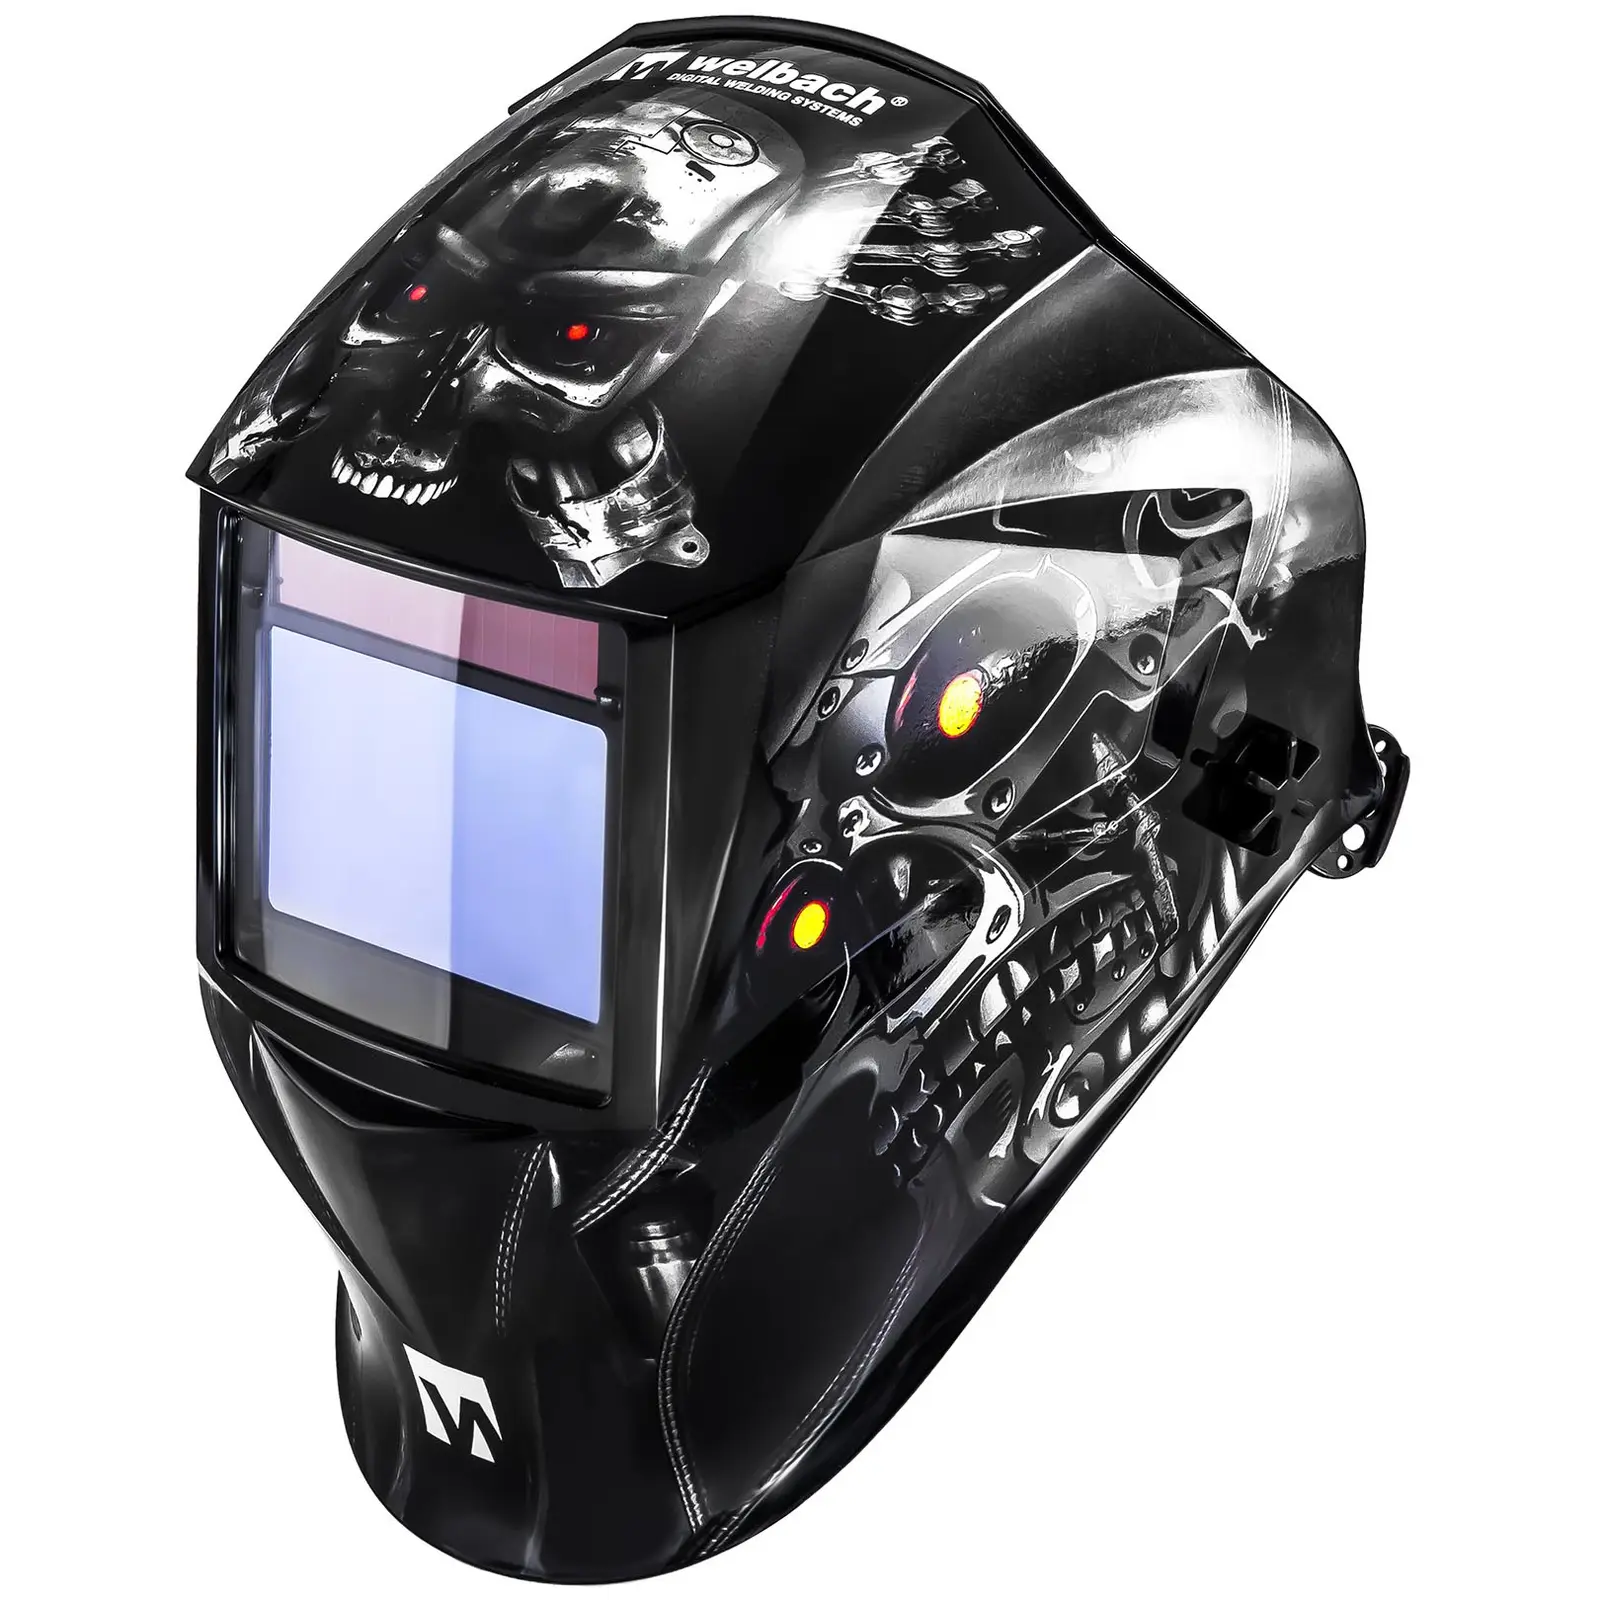 Svářecí helma Metalator expert series - Svářecí helmy welbach